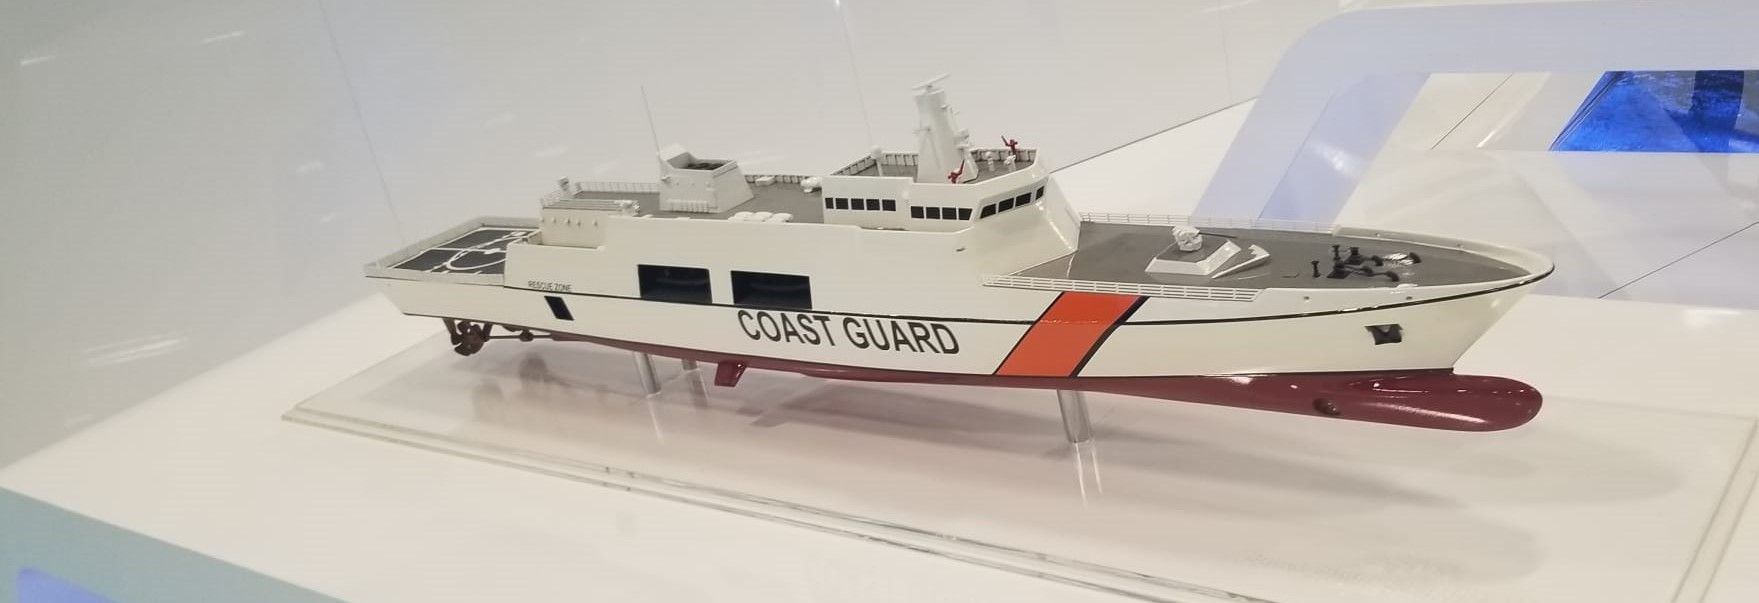 STM Showcasing Coast Guard Ship